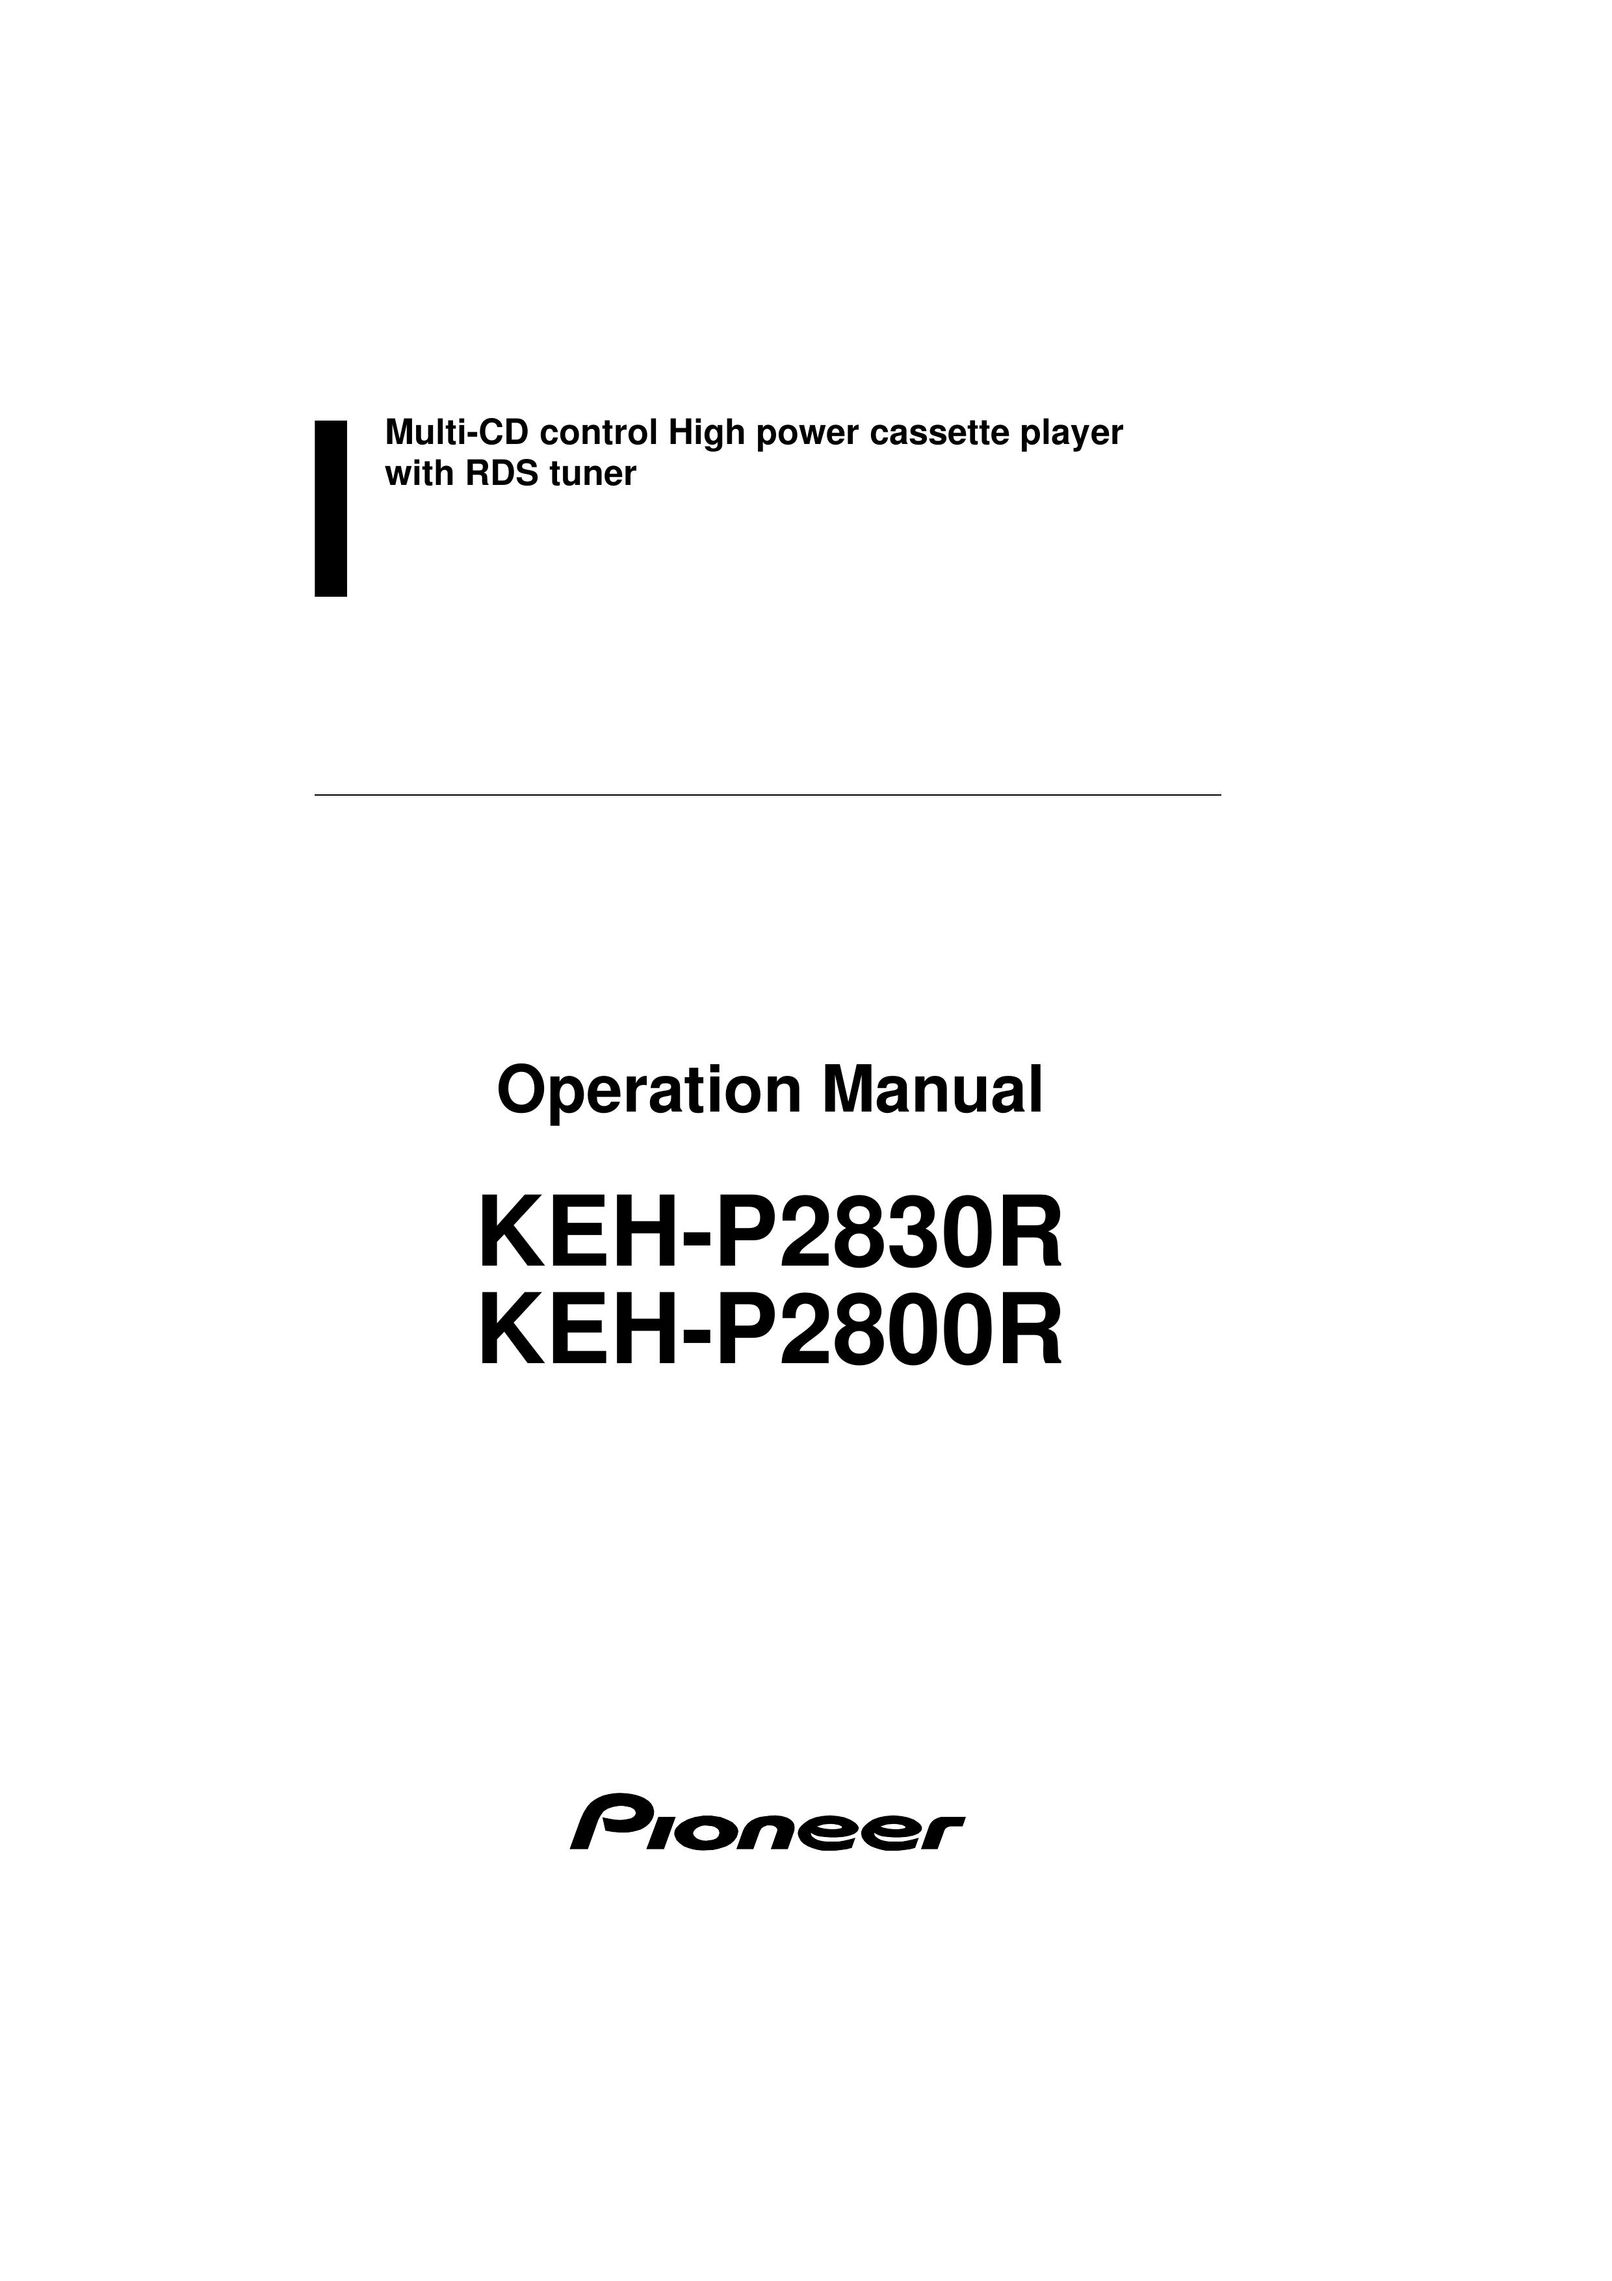 Pioneer KEH-P2830R Cassette Player User Manual